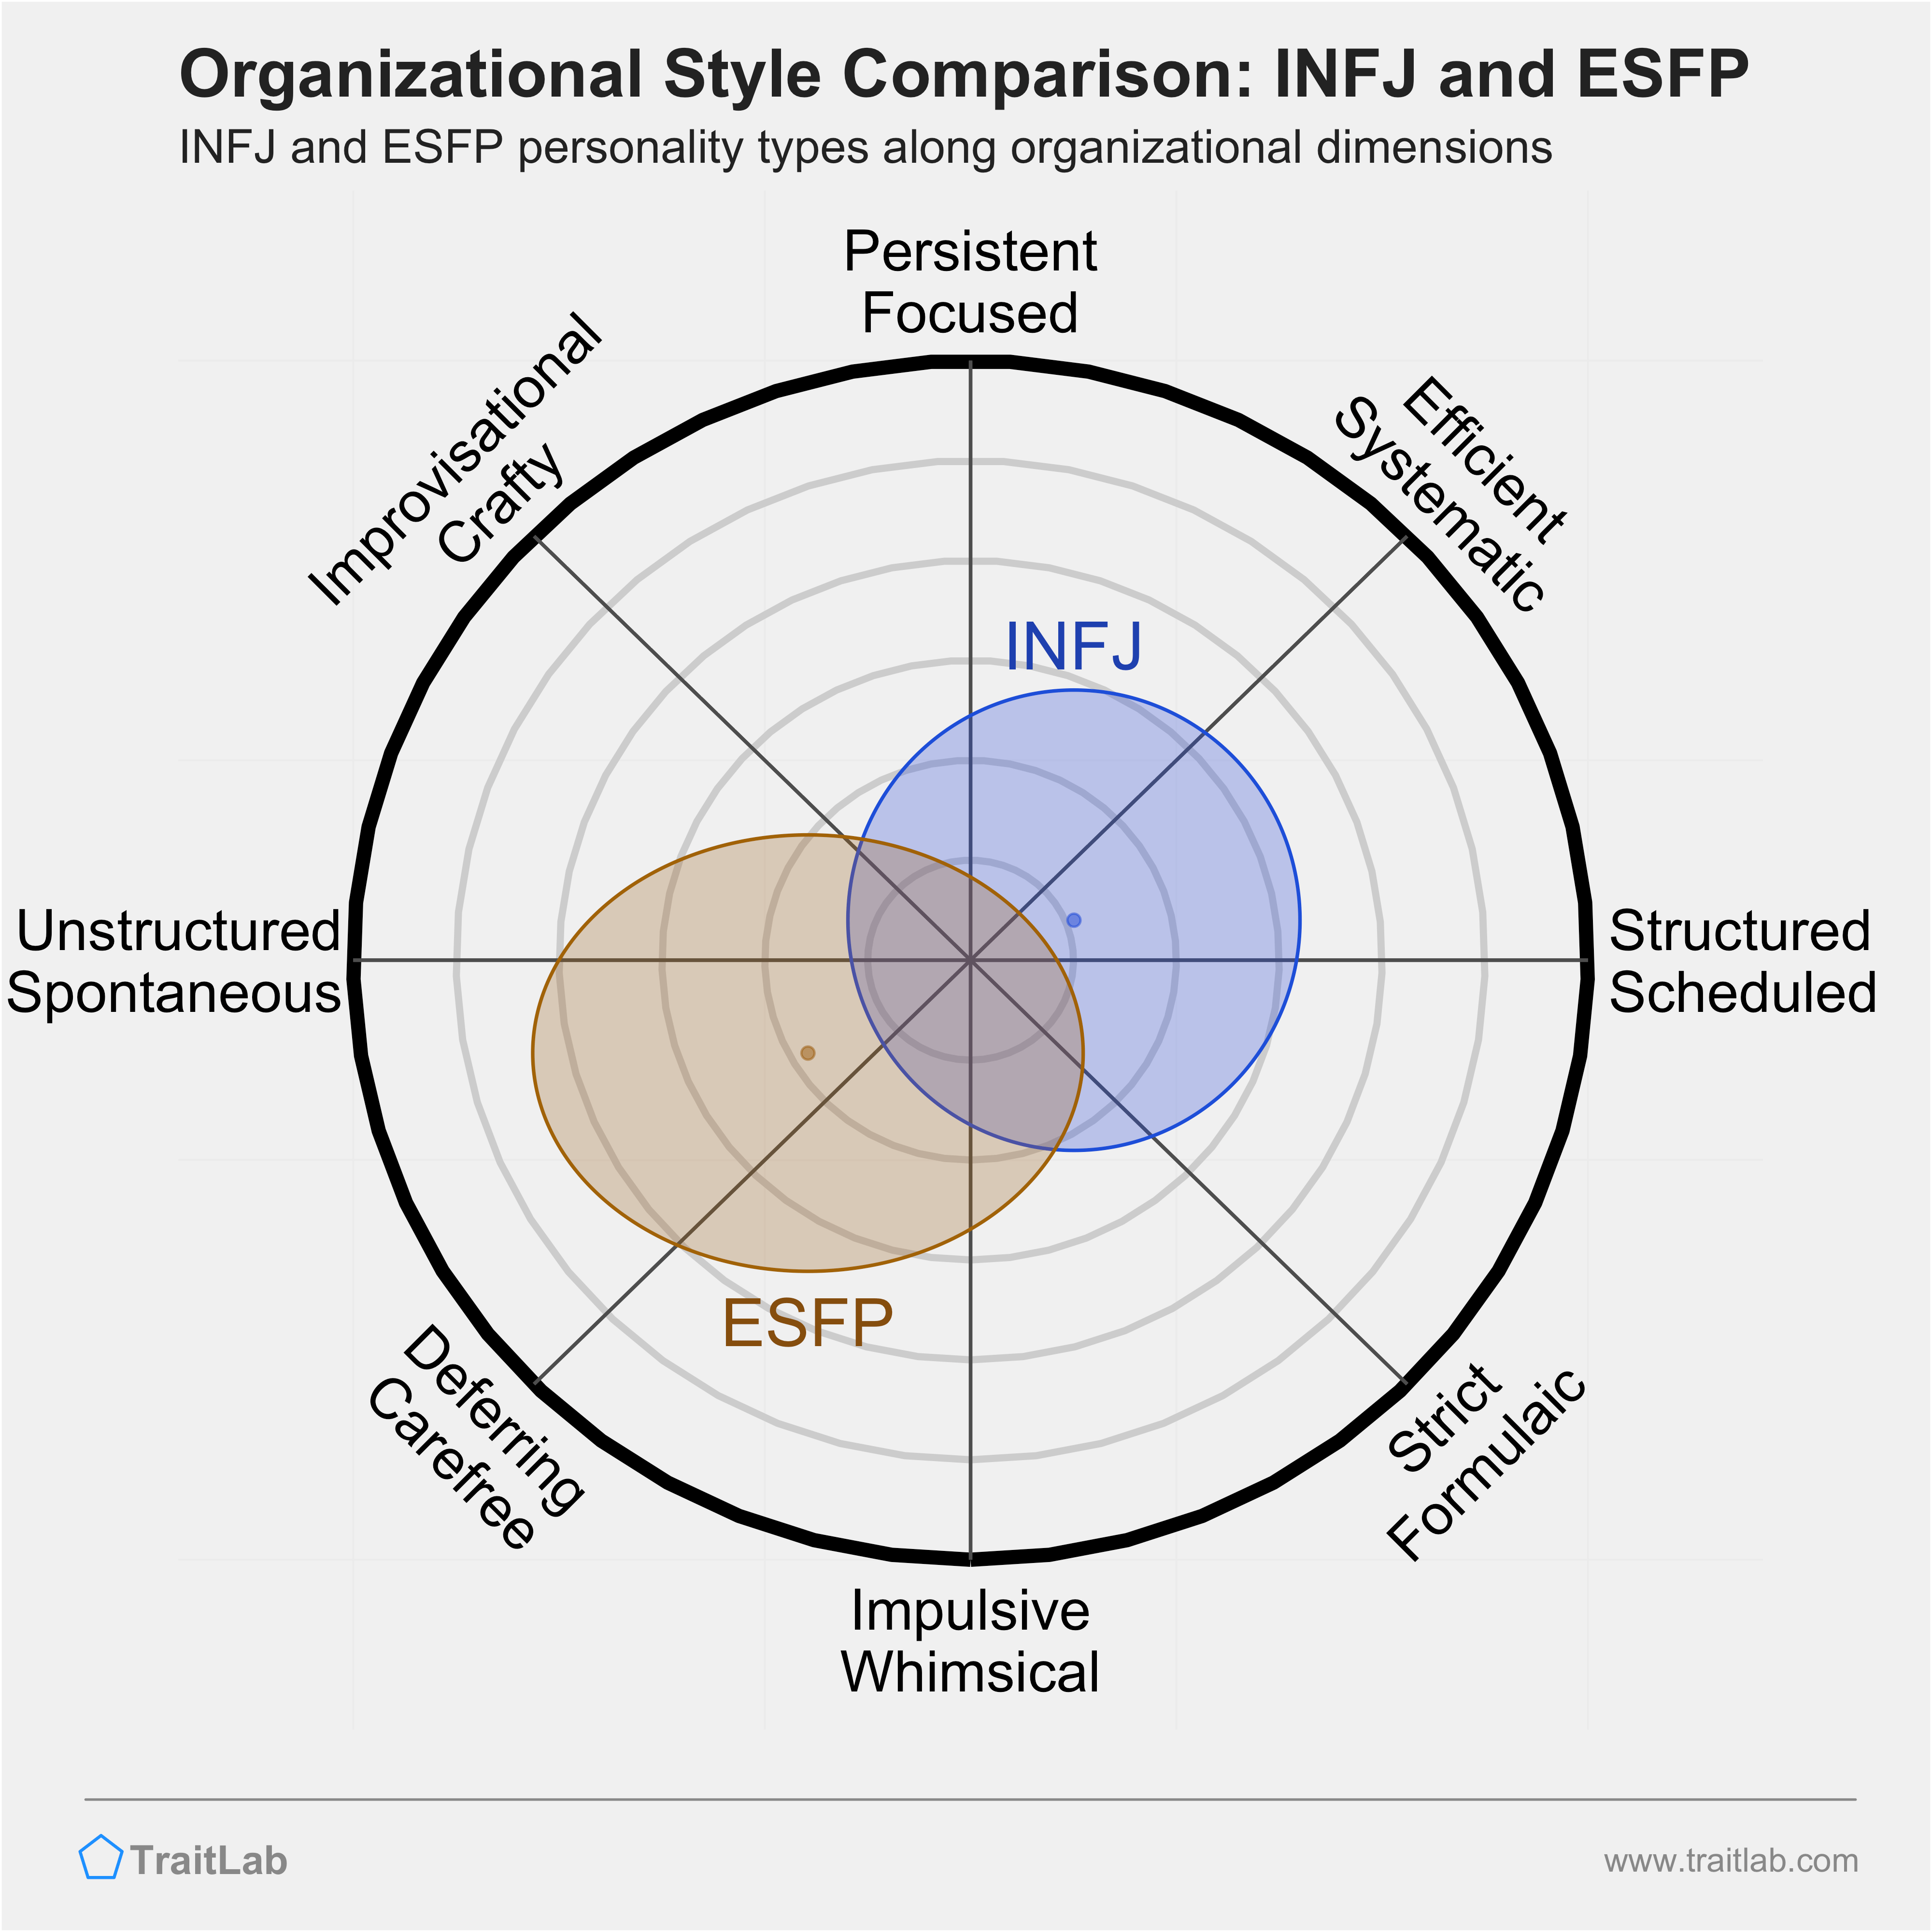 INFJ and ESFP comparison across organizational dimensions